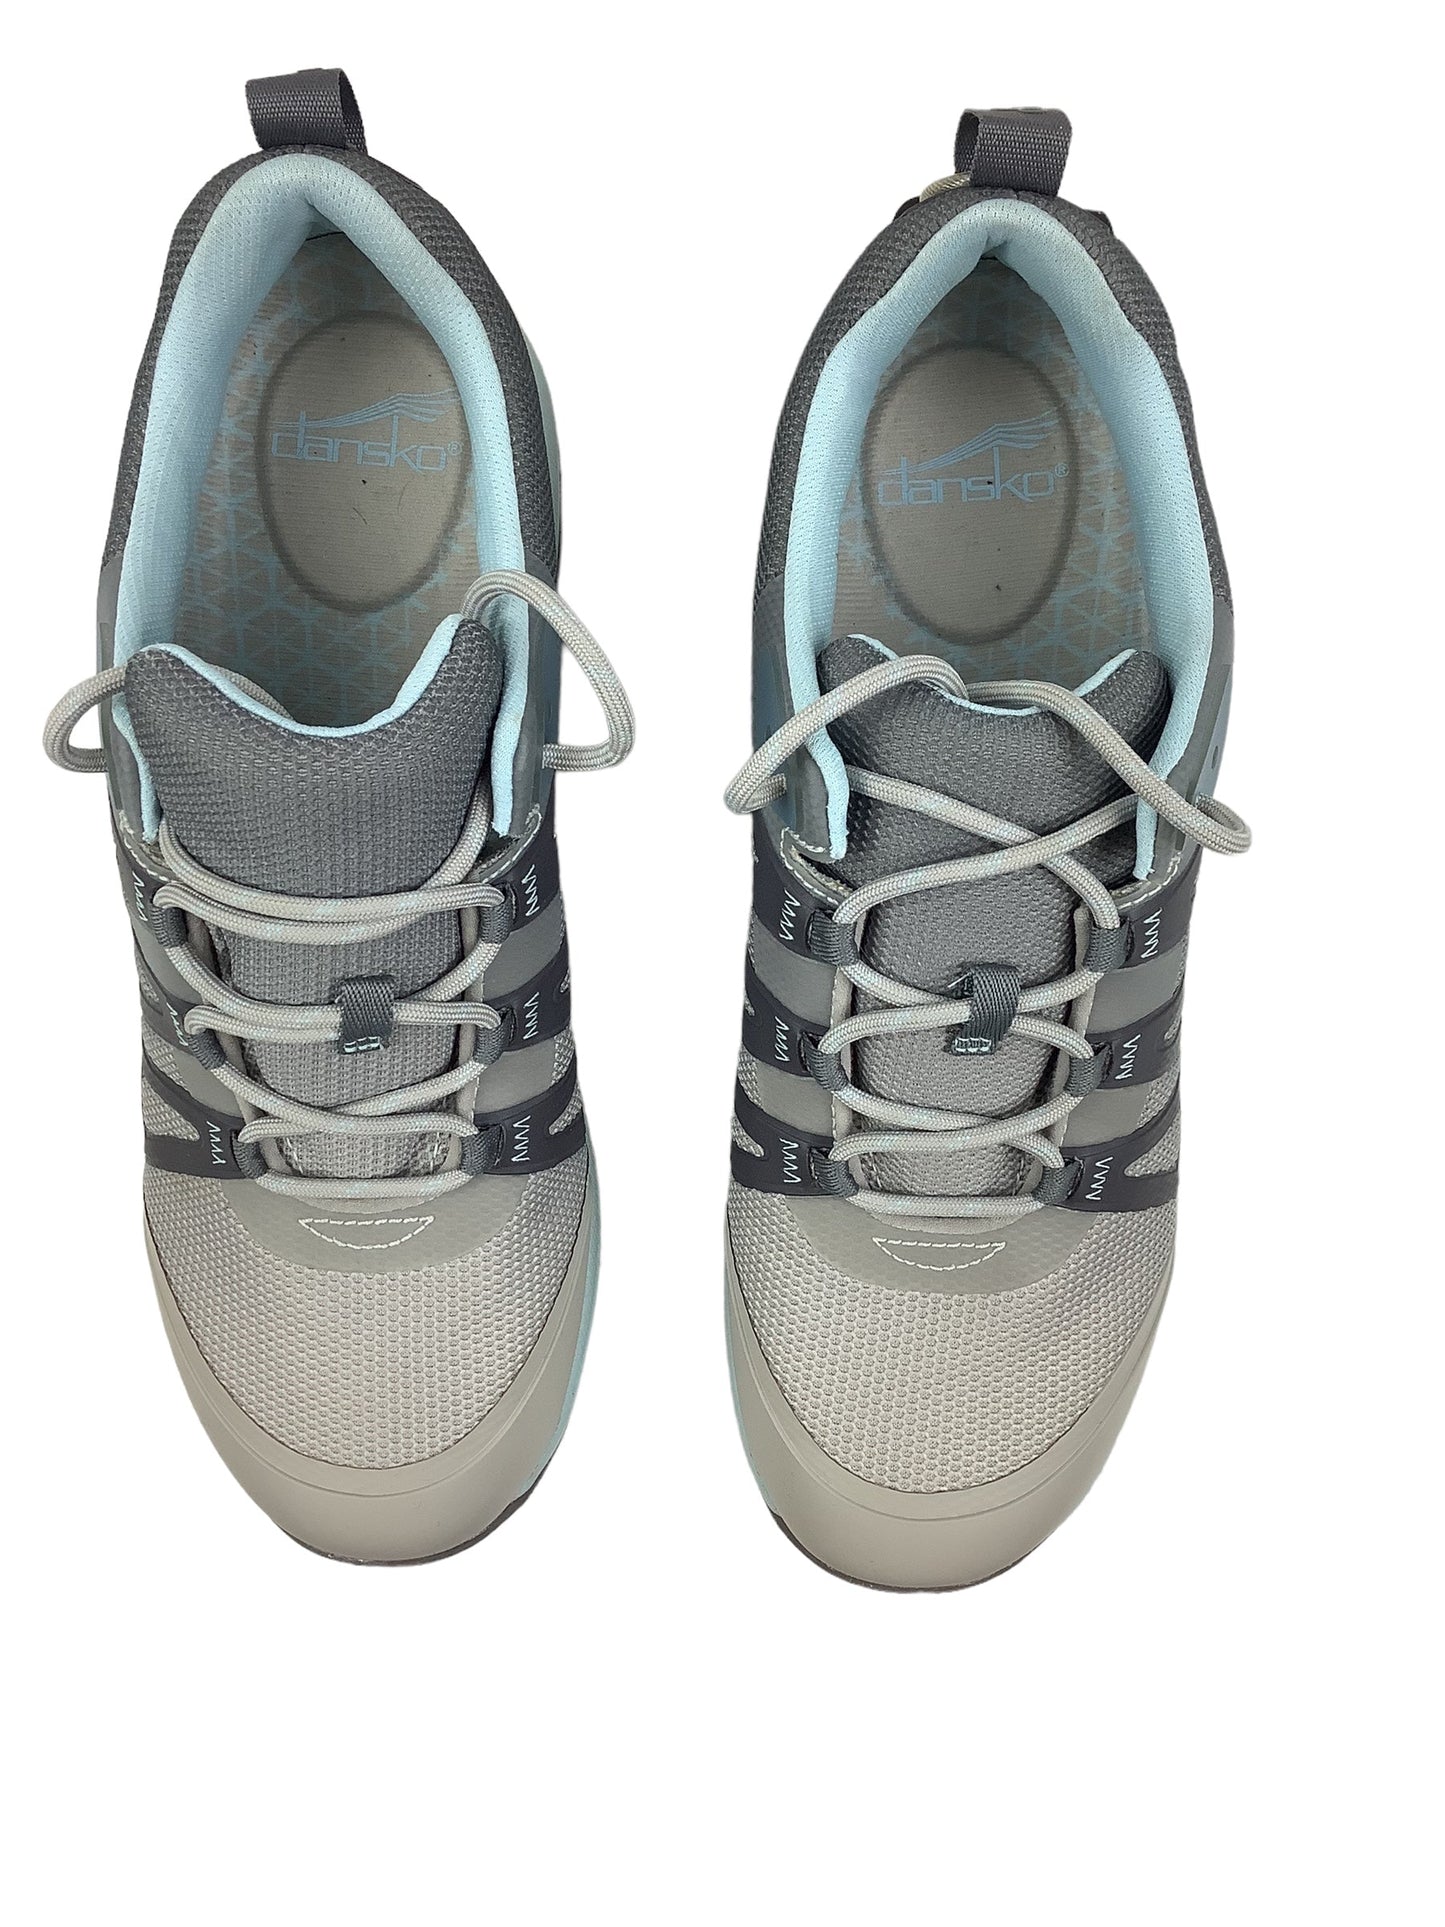 Shoes Hiking By Dansko  Size: 7.5